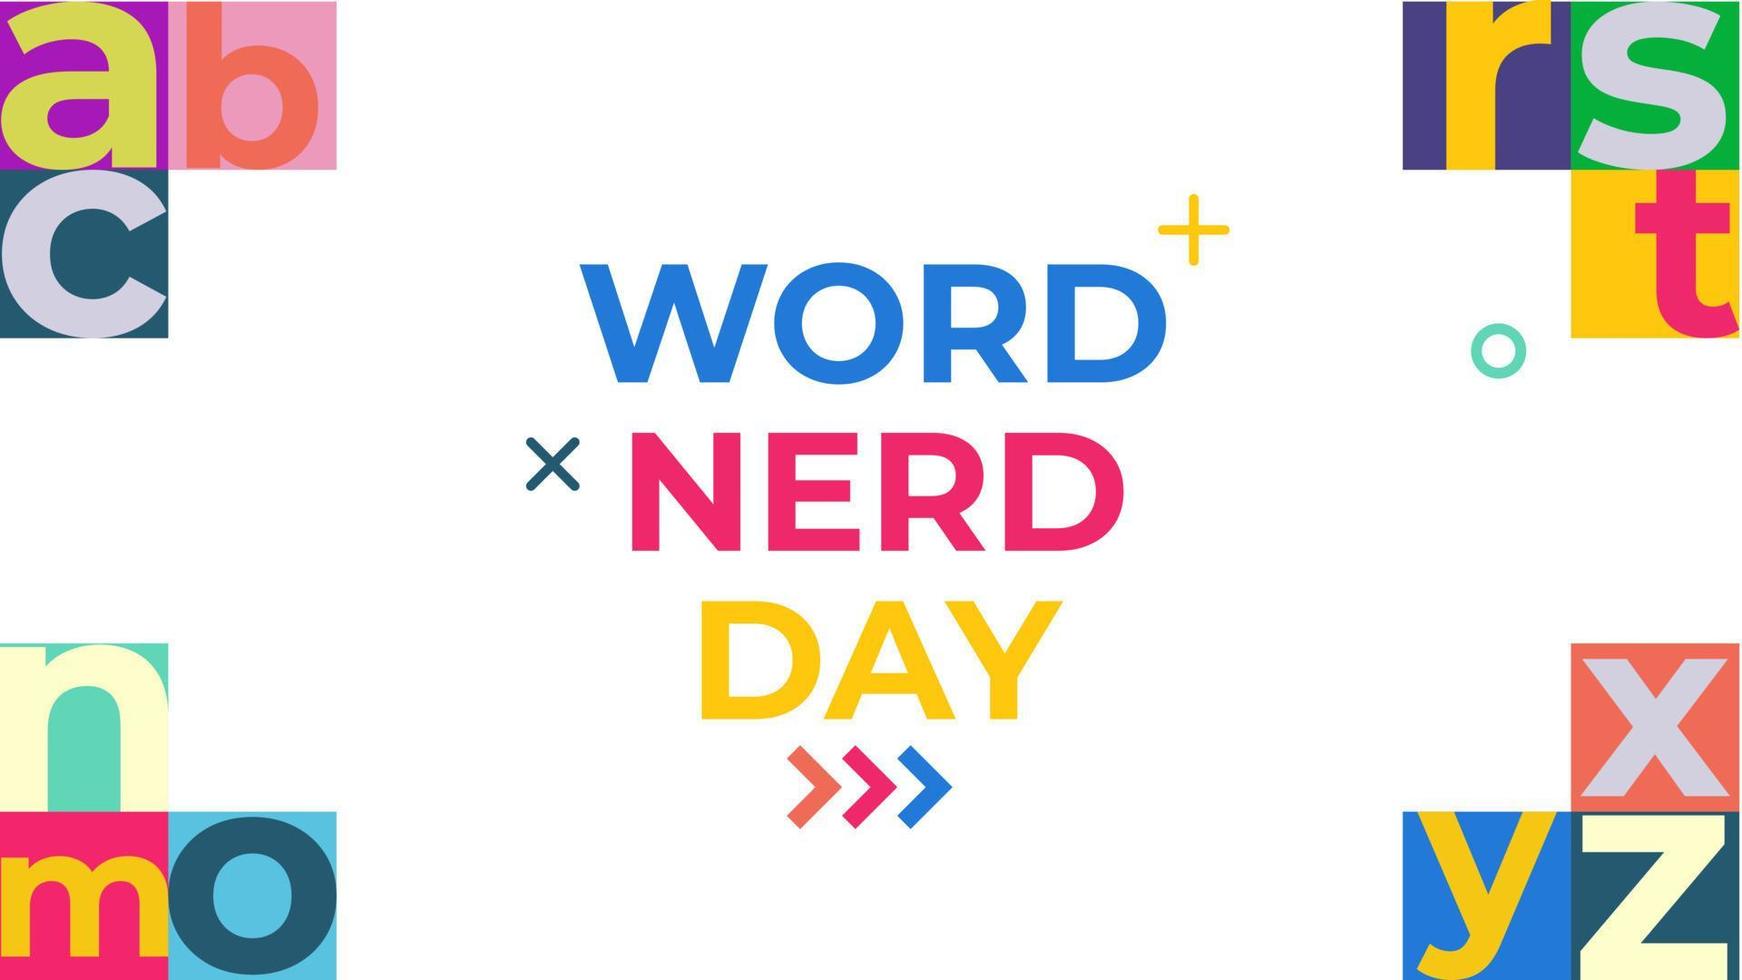 palabra nerd día alfabeto copia espacio fondo vector estilo plano. adecuado para póster, portada, web, banner de redes sociales.